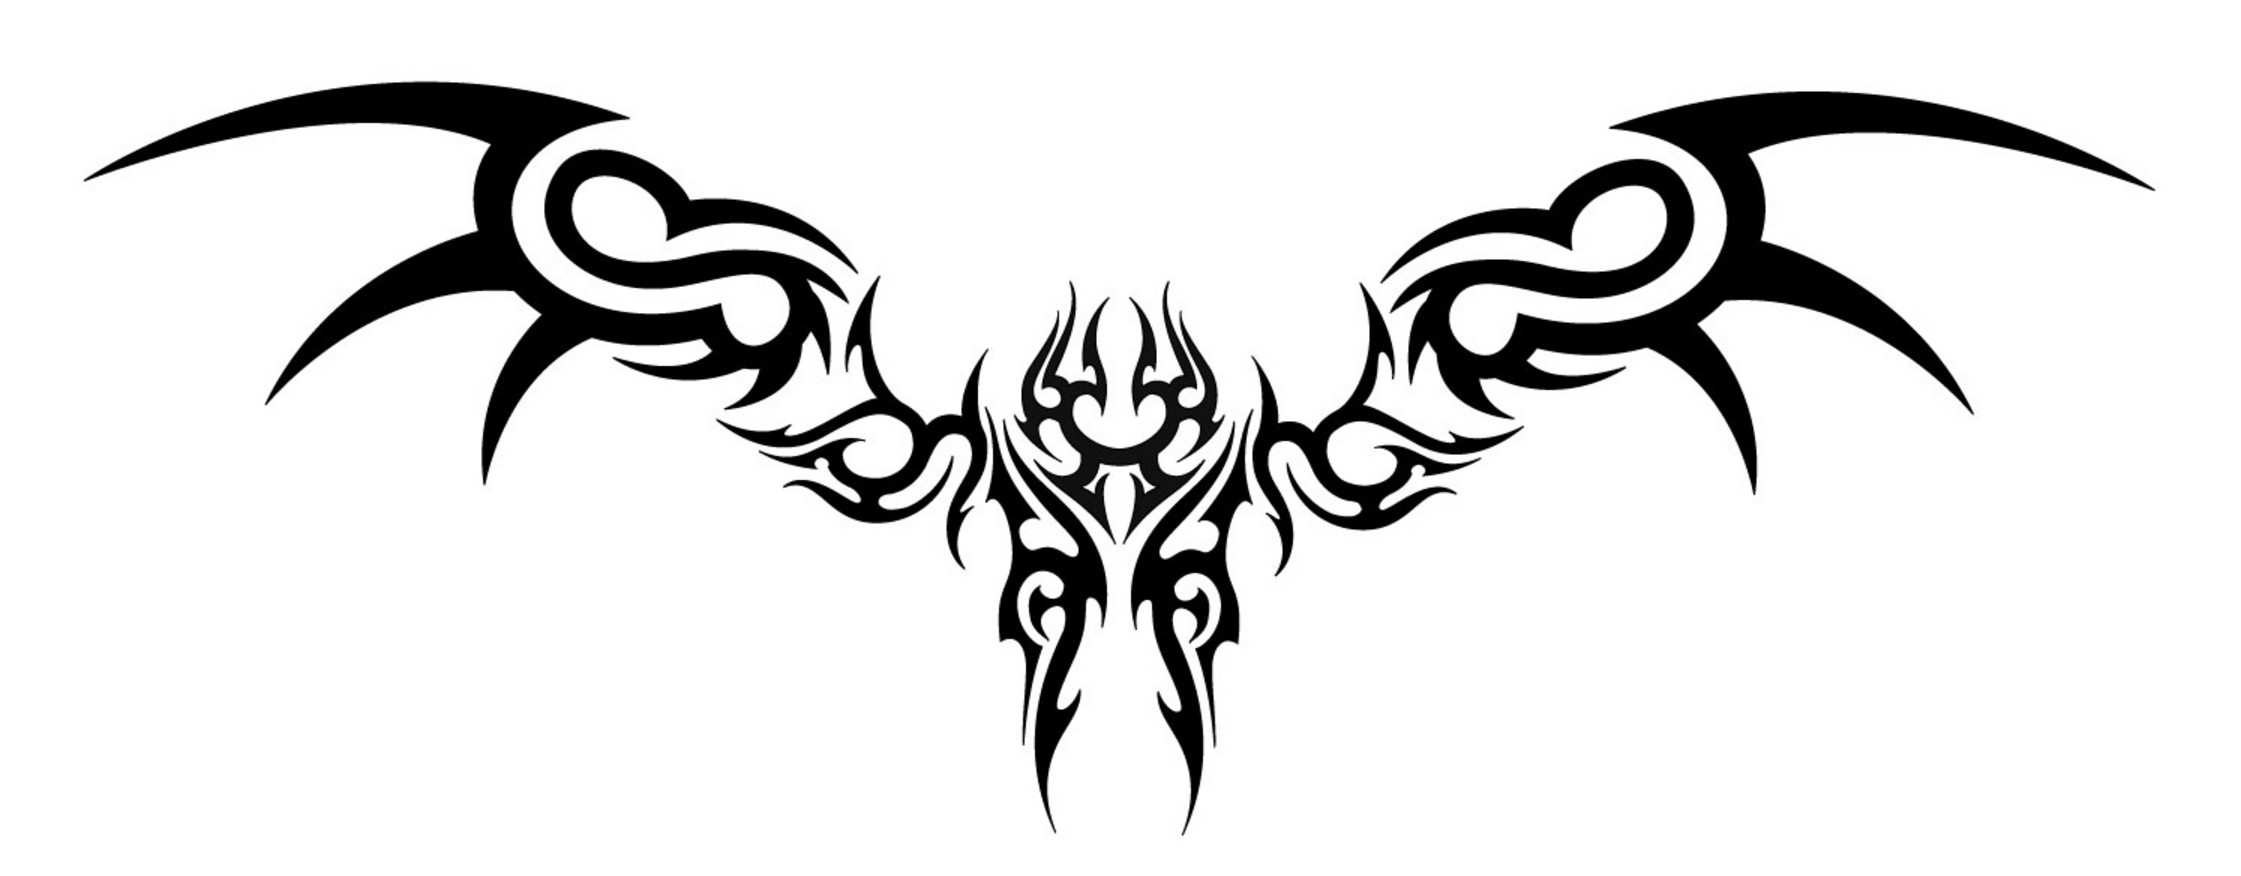 Creative Tribal Wings Tattoo Design